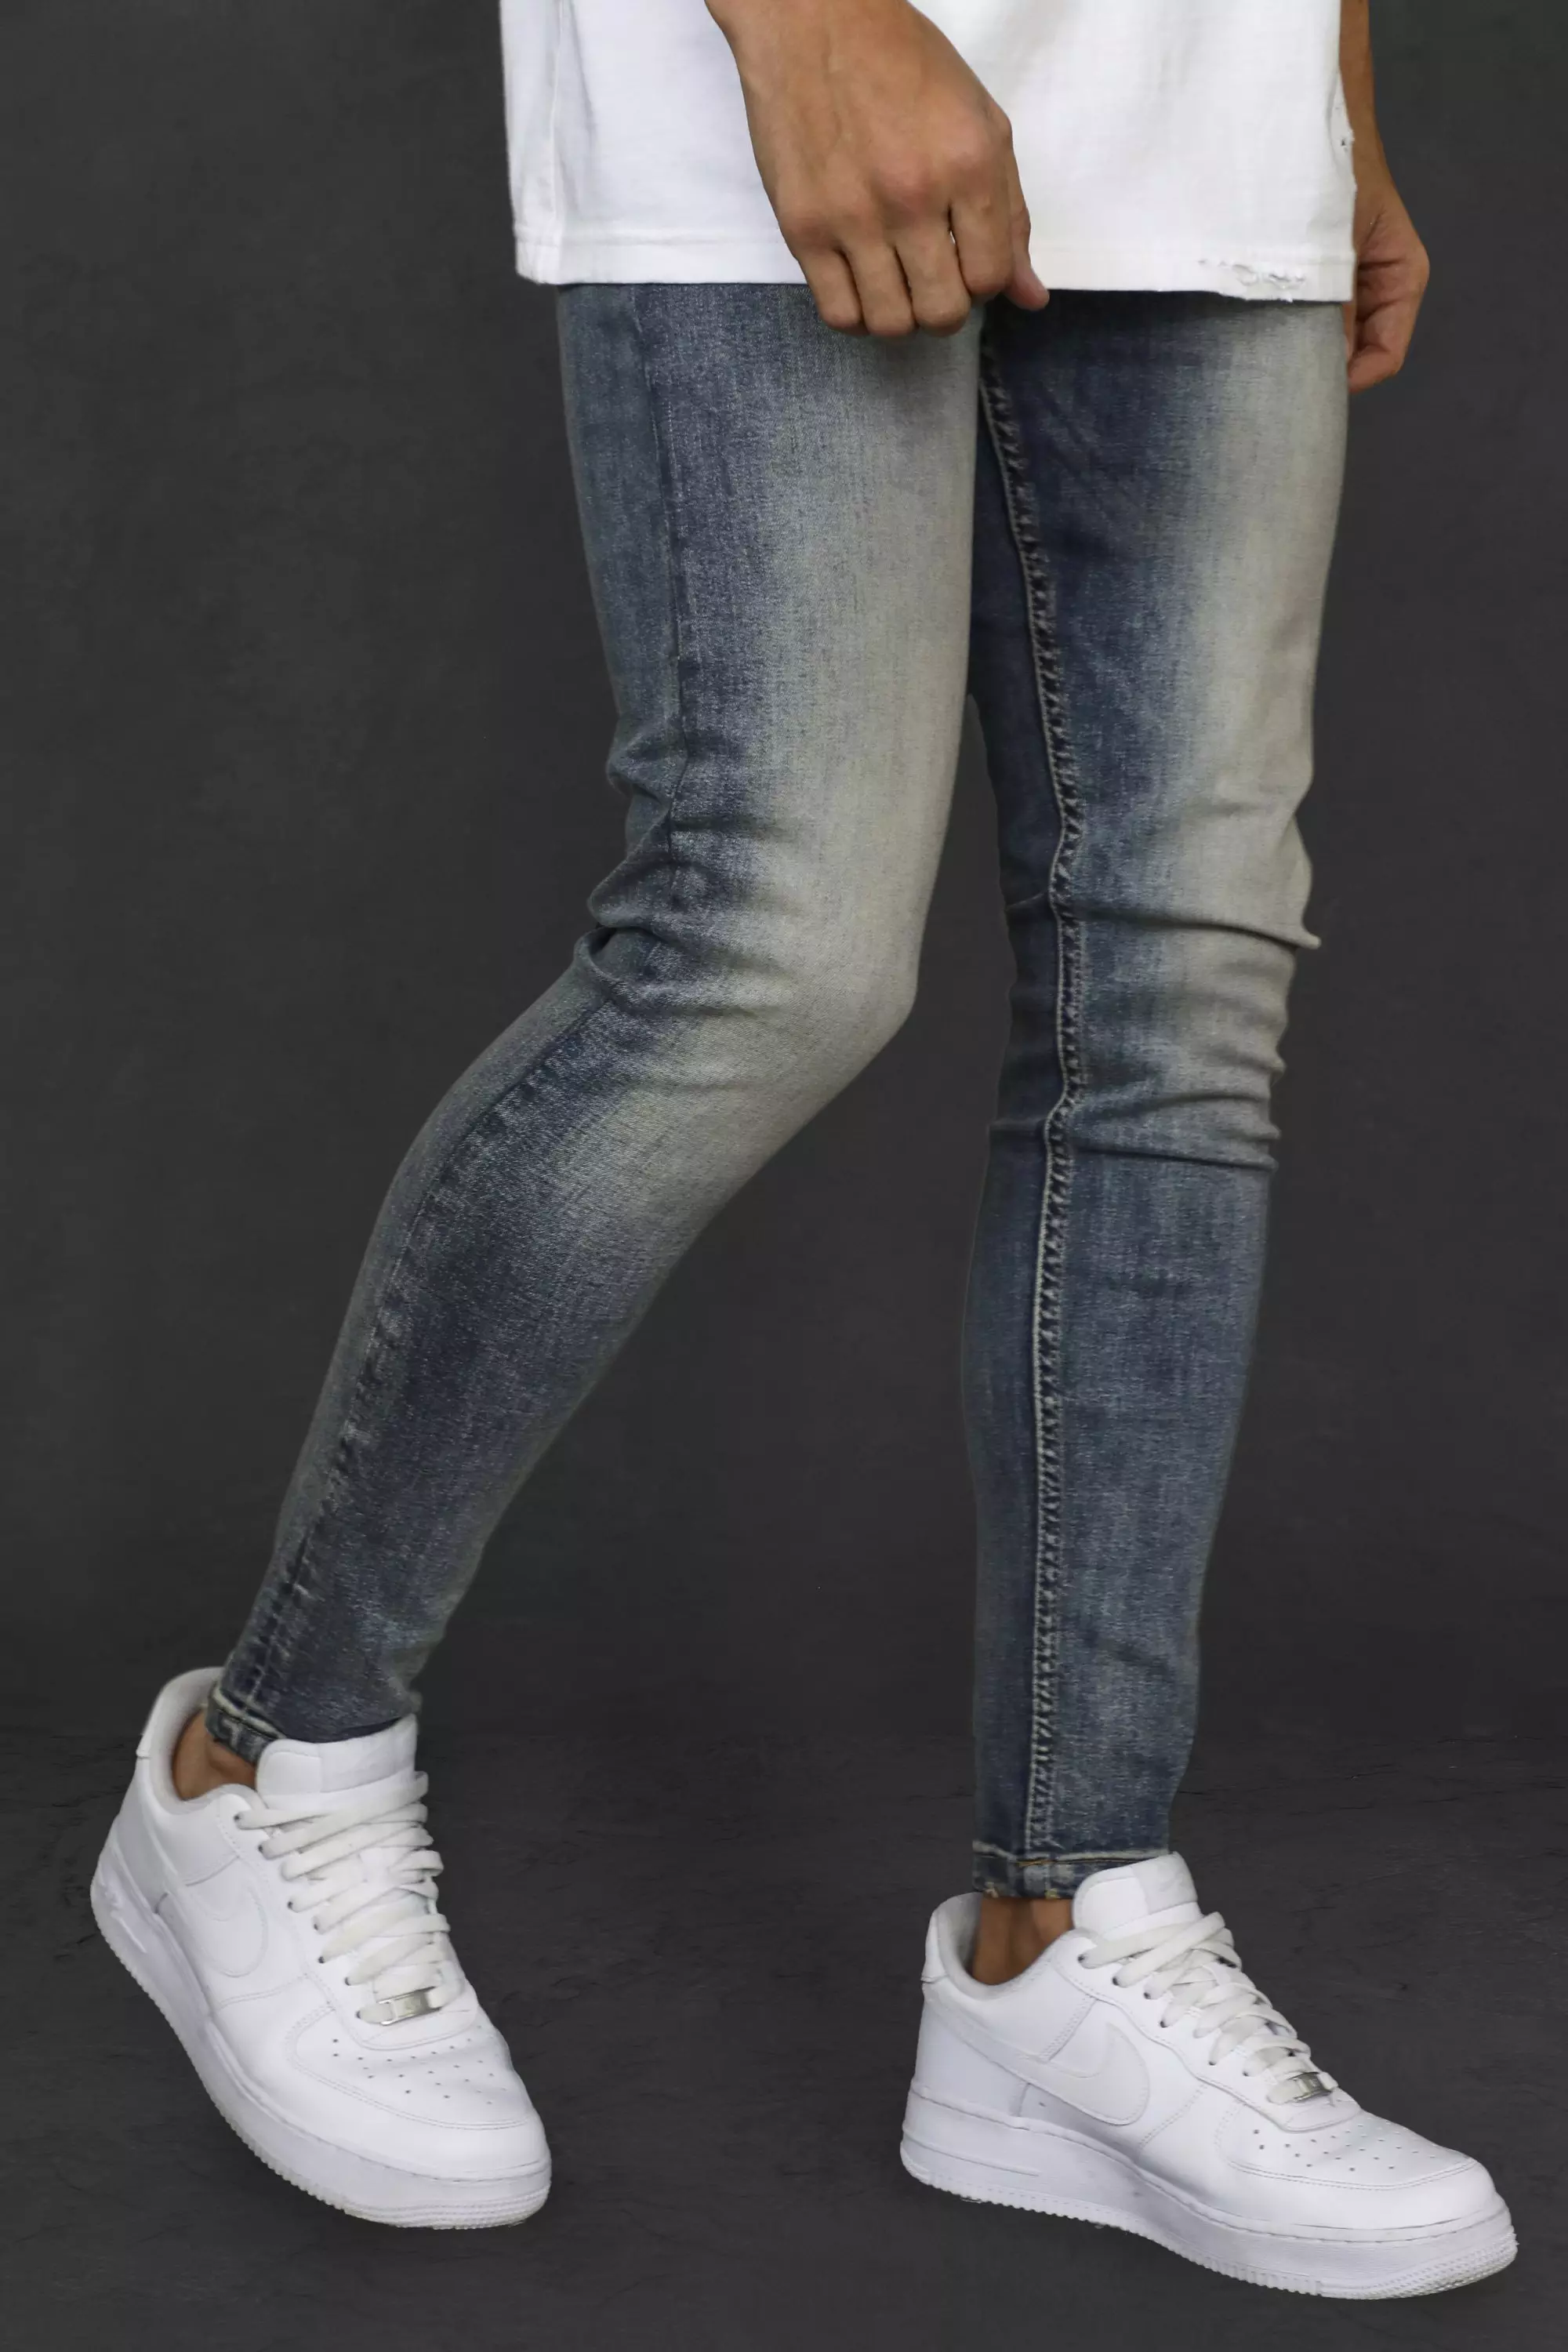 Blue Skinny Stretch Jeans